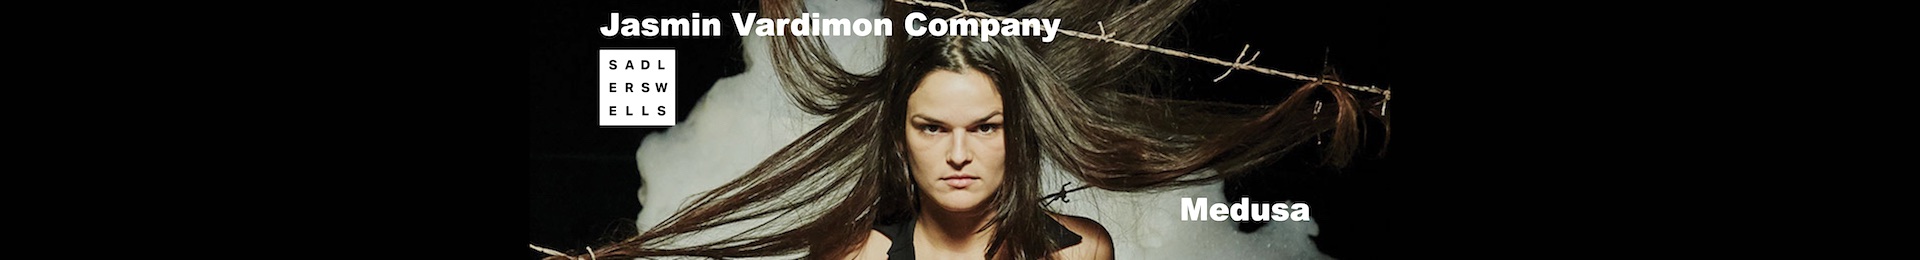 Jasmin Vardimon Company: Medusa banner image